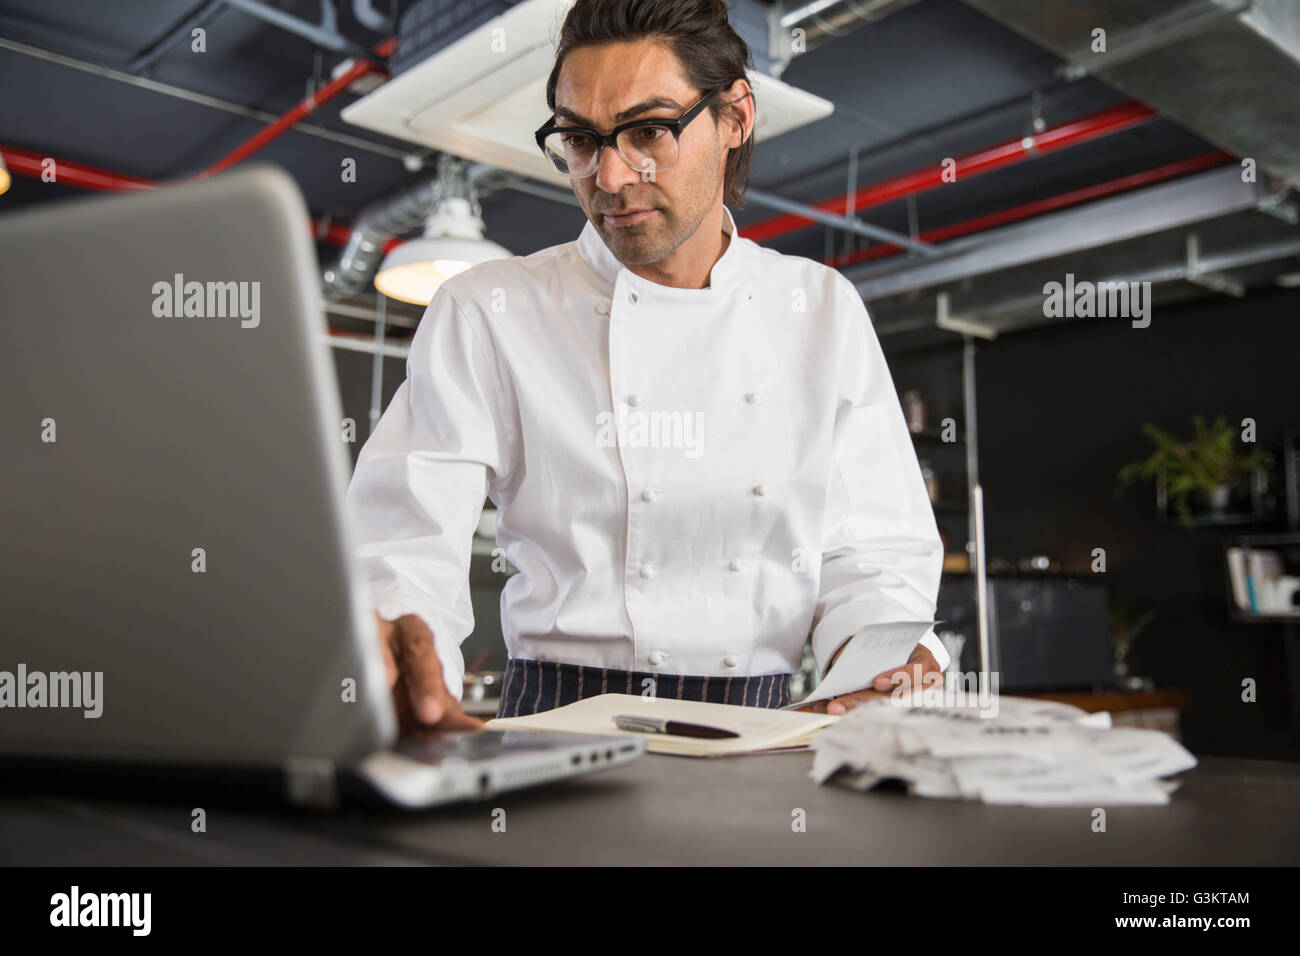 Chef in restaurant using laptop Stock Photo